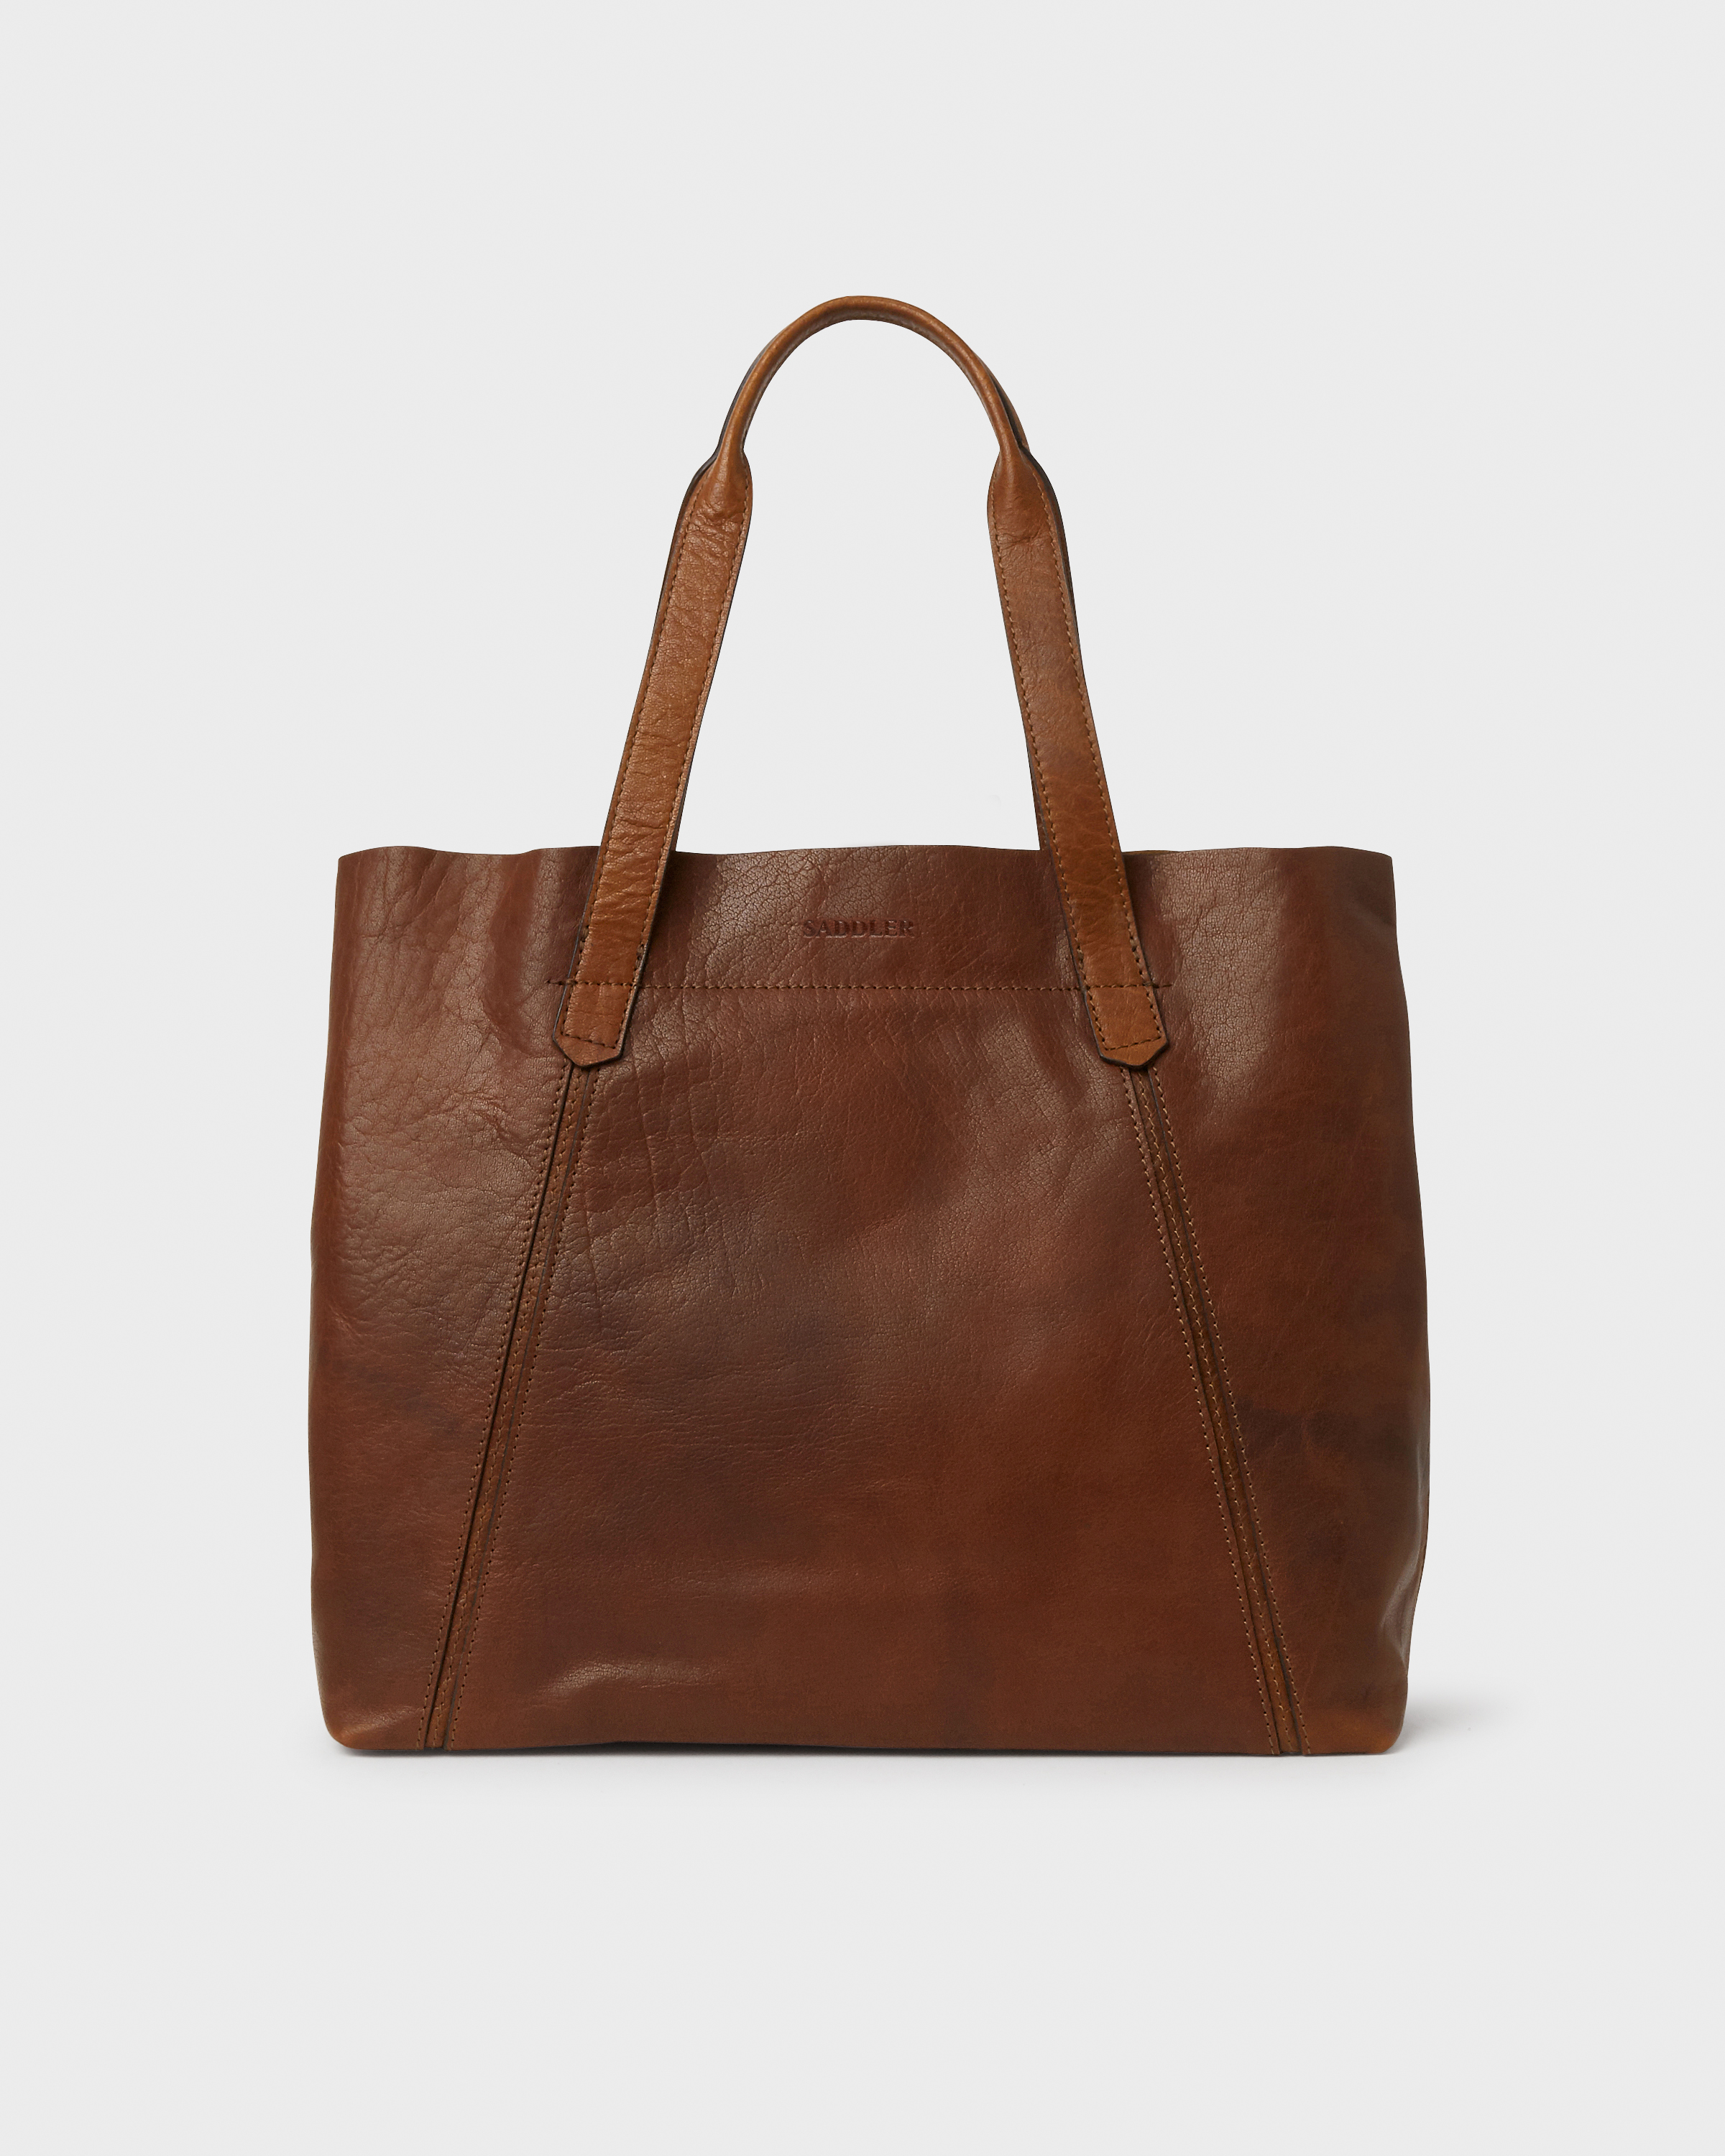 Buy Paris tote bag at www.semadata.org - The swedish leather brand | Saddler